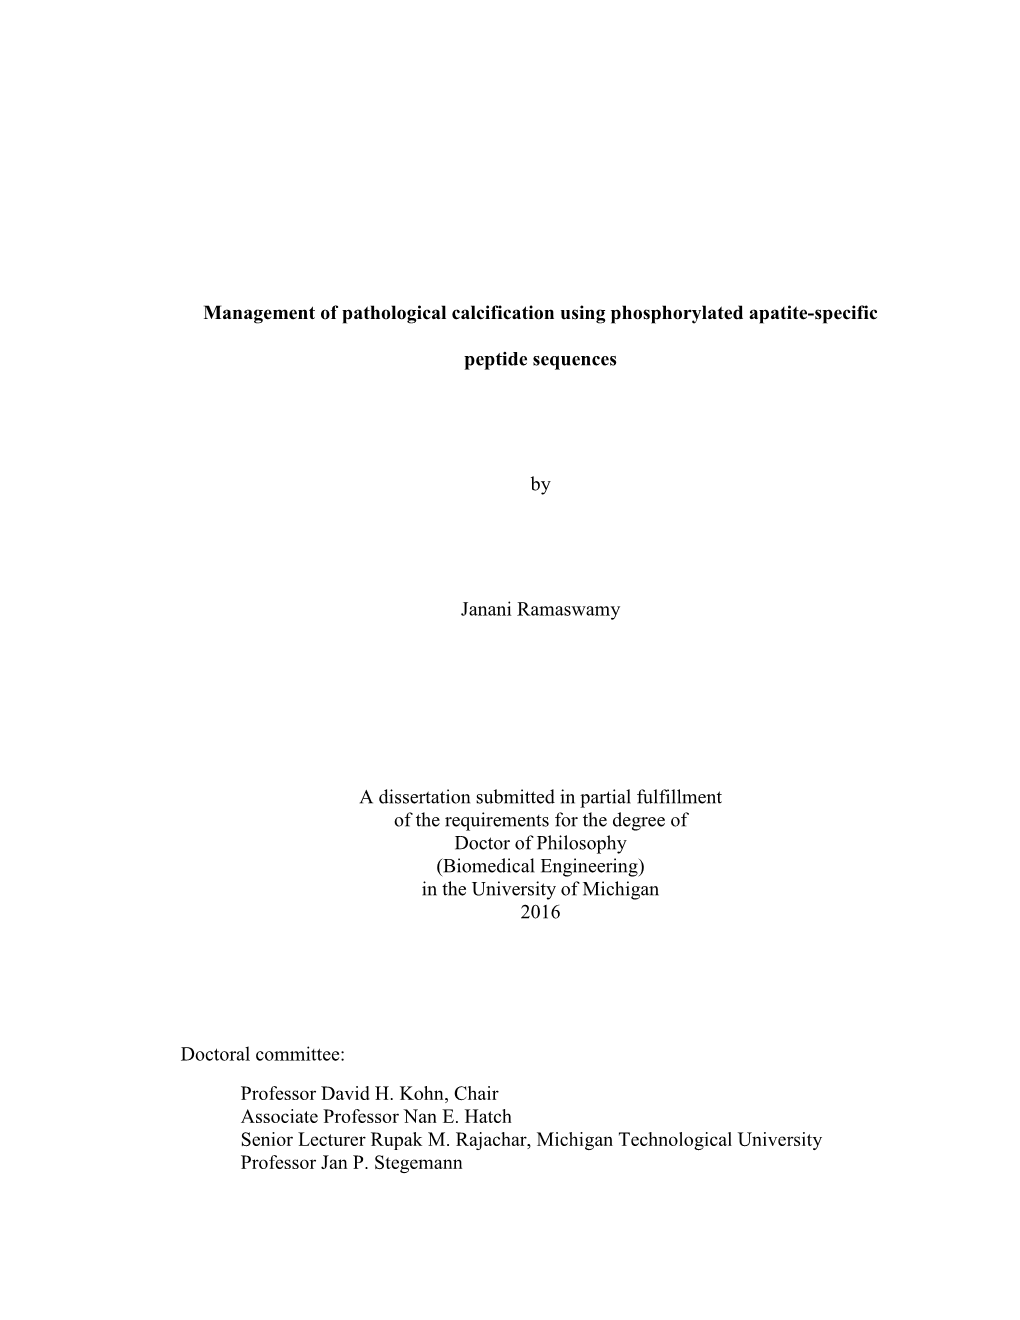 Management of Pathological Calcification Using Phosphorylated Apatite-Specific